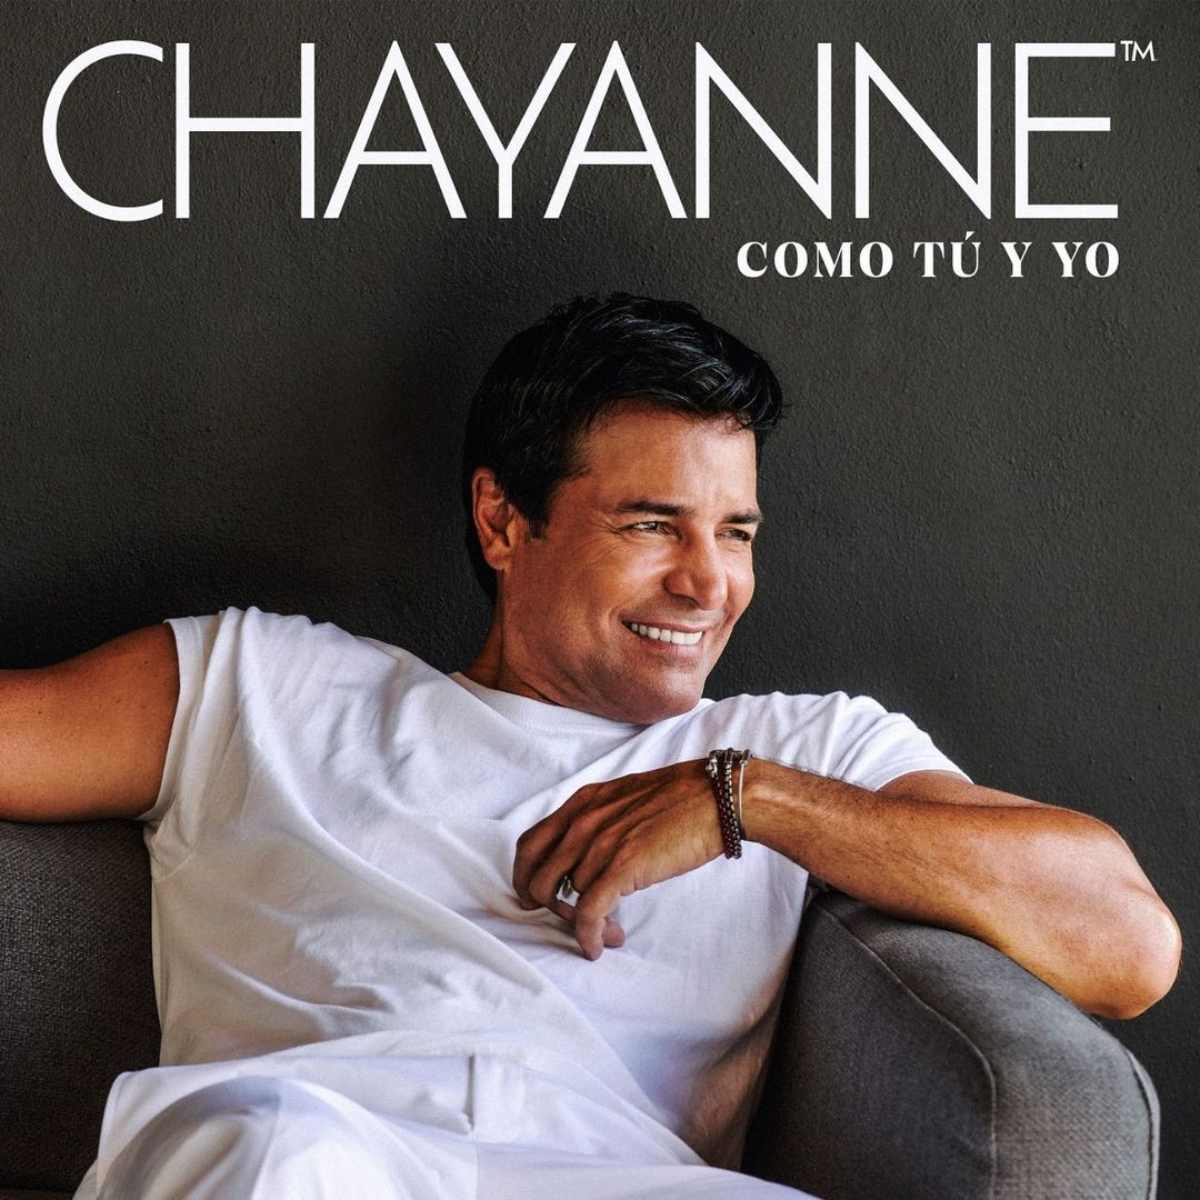 Chayanne Nuevo Album 